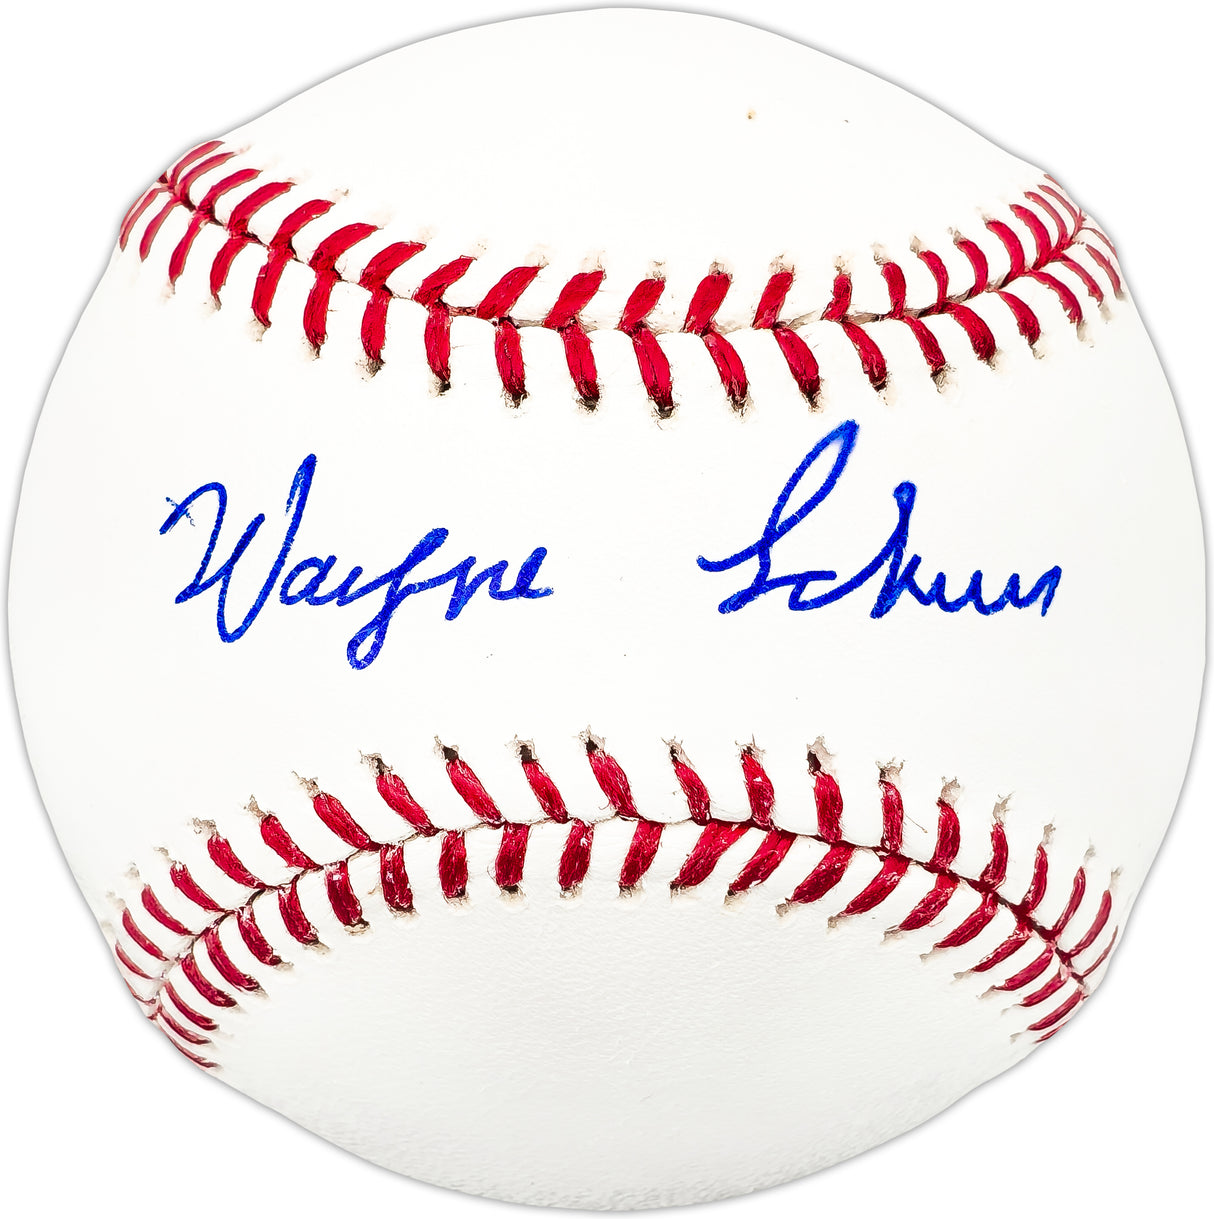 Wayne Schurr Autographed Official MLB Baseball Chicago Cubs SKU #225631